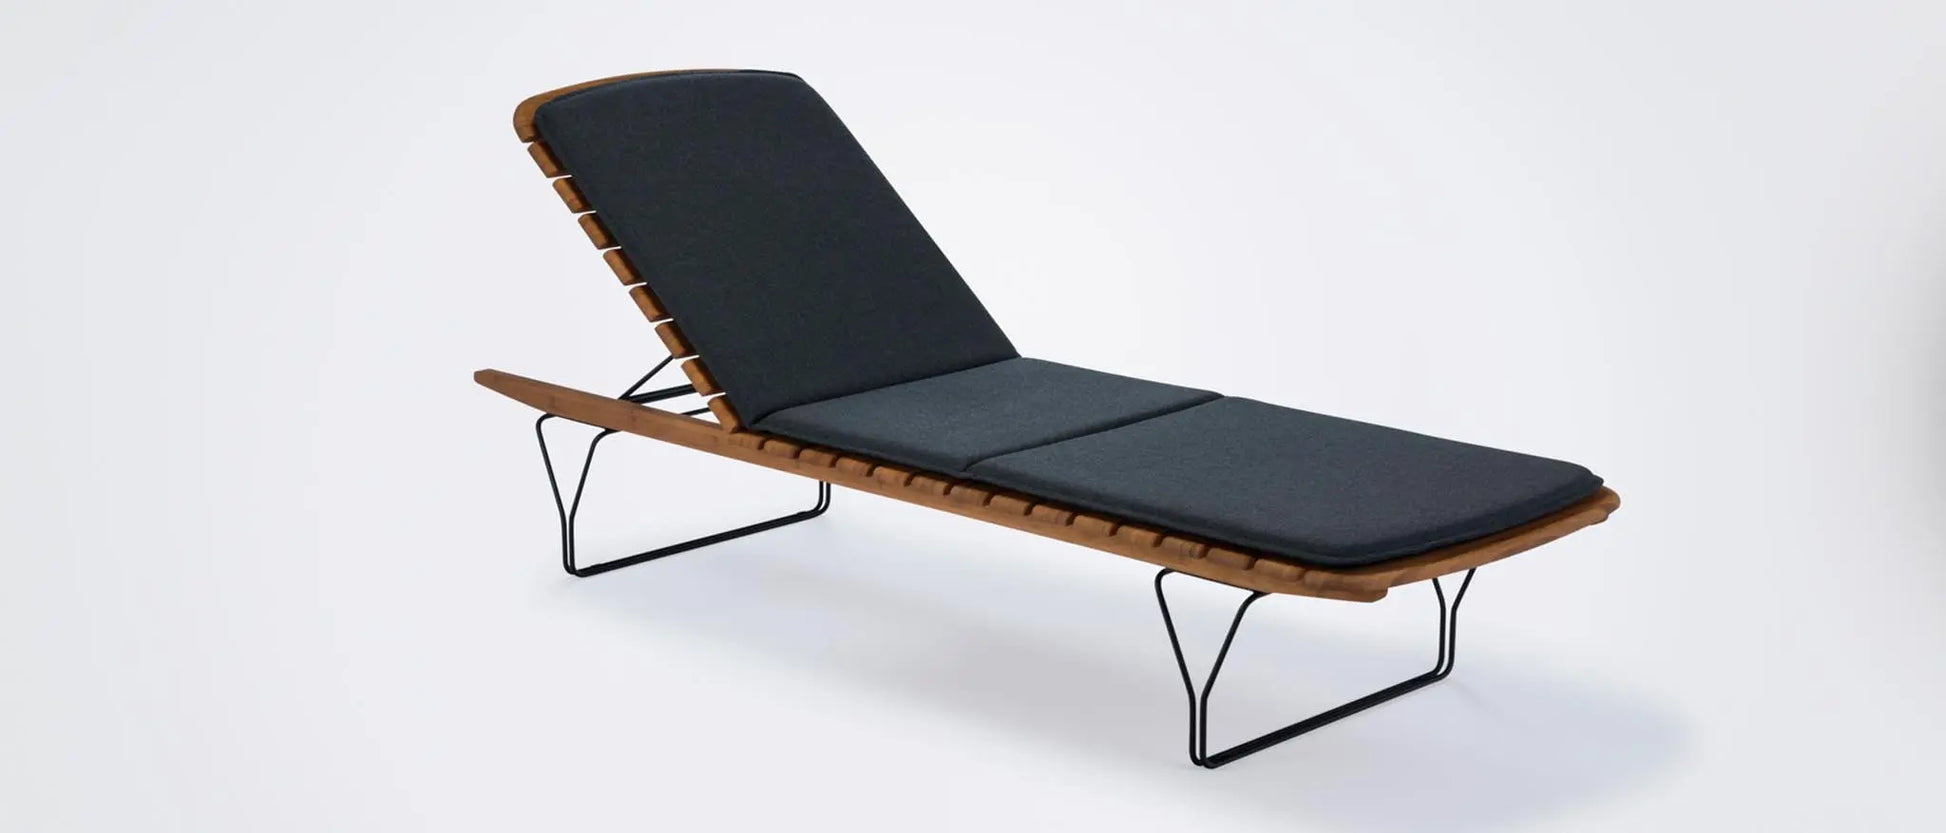 Molo Sunbed Danish Furniture Ltd